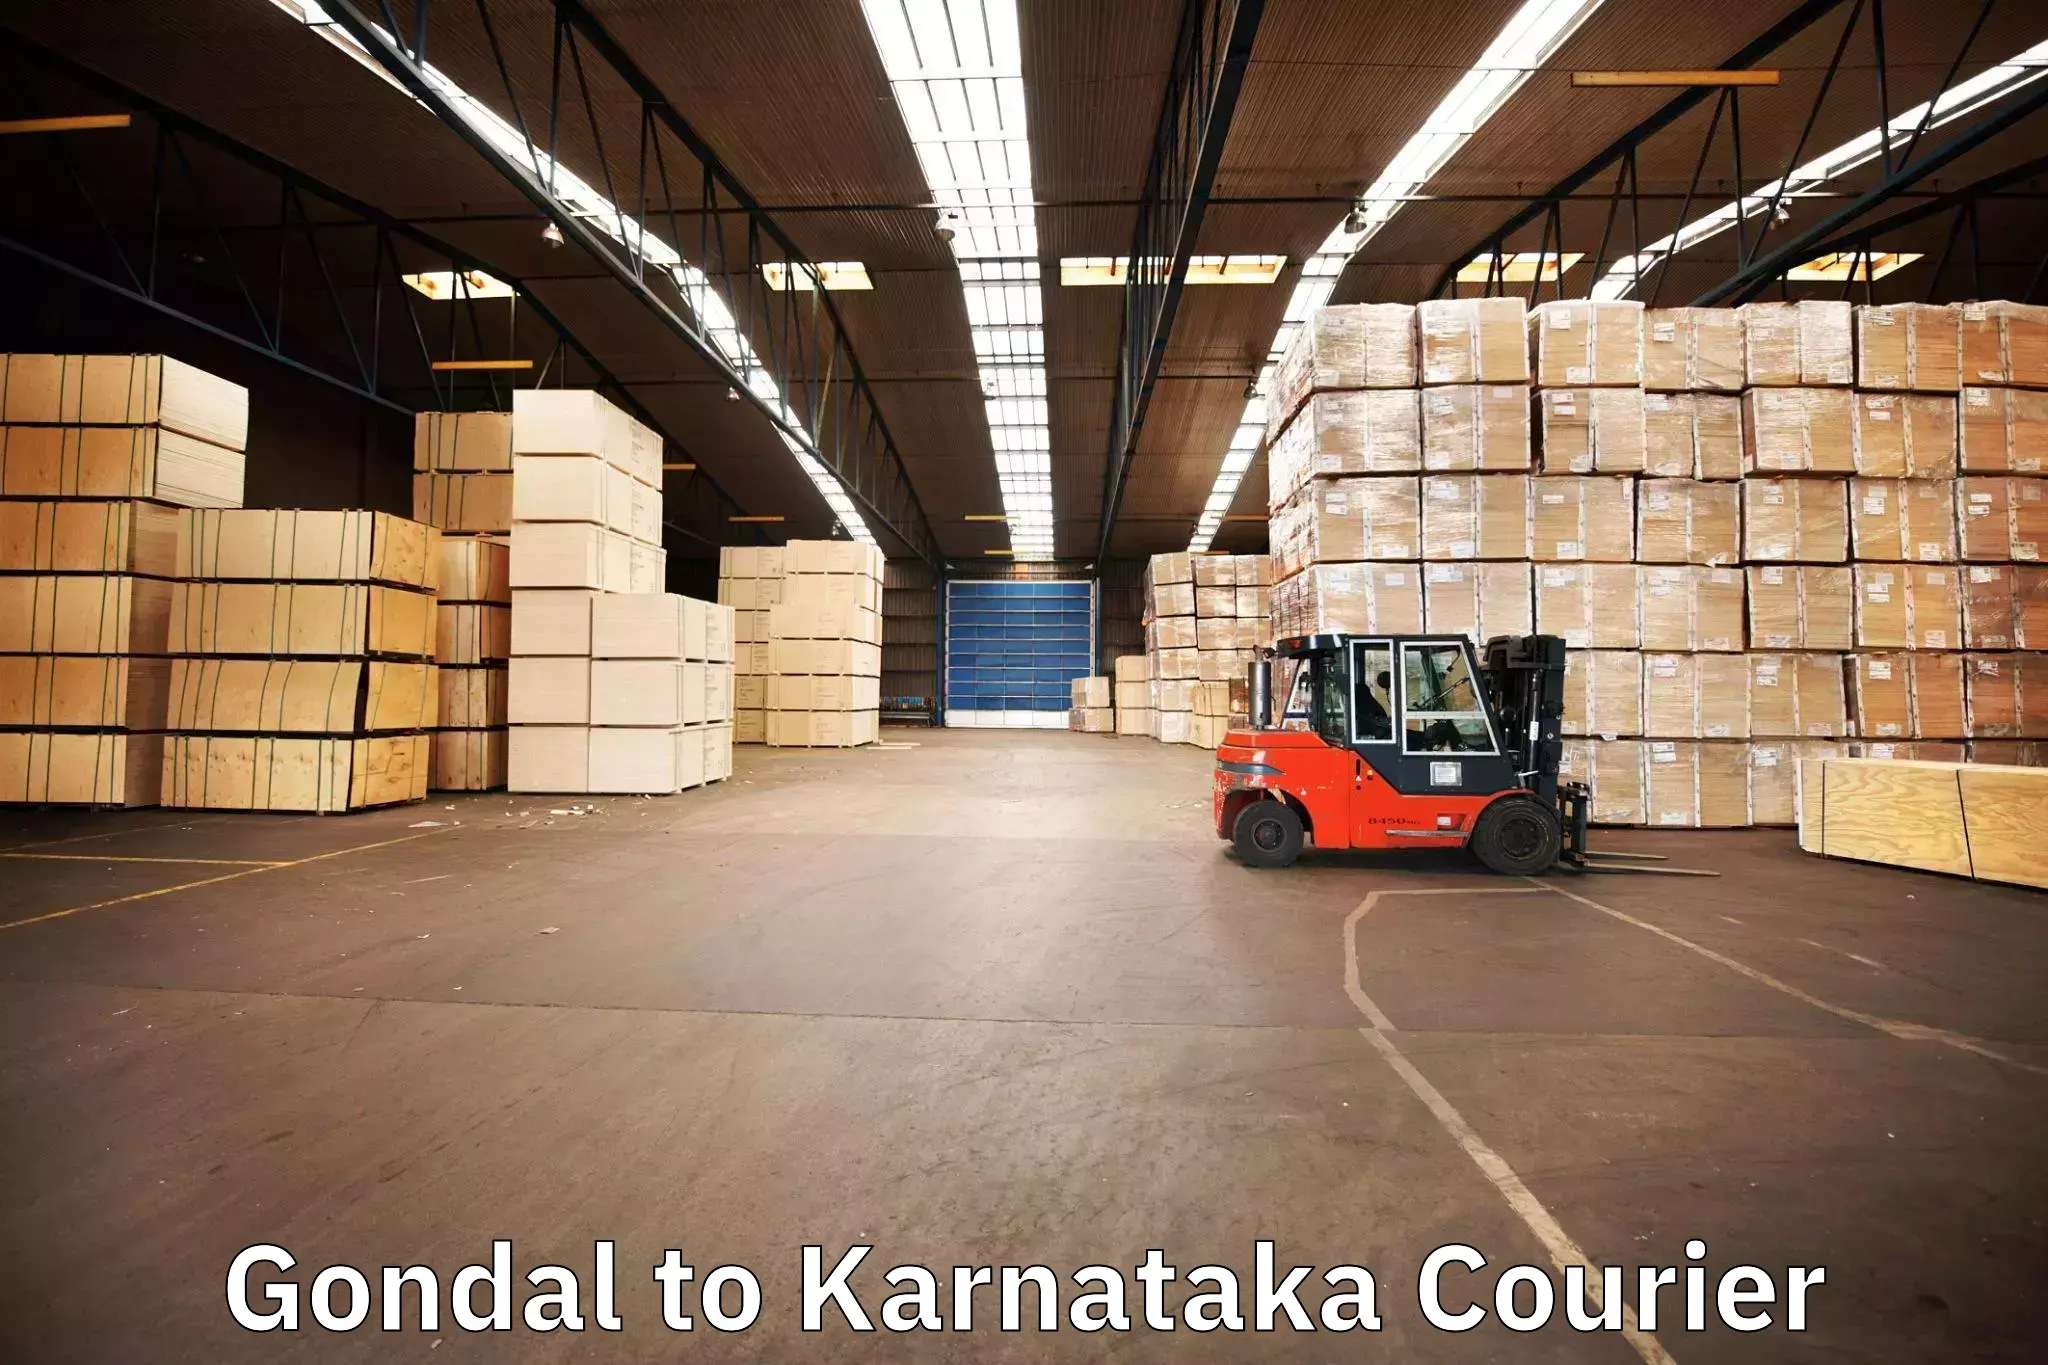 Professional moving company Gondal to Kalaburagi